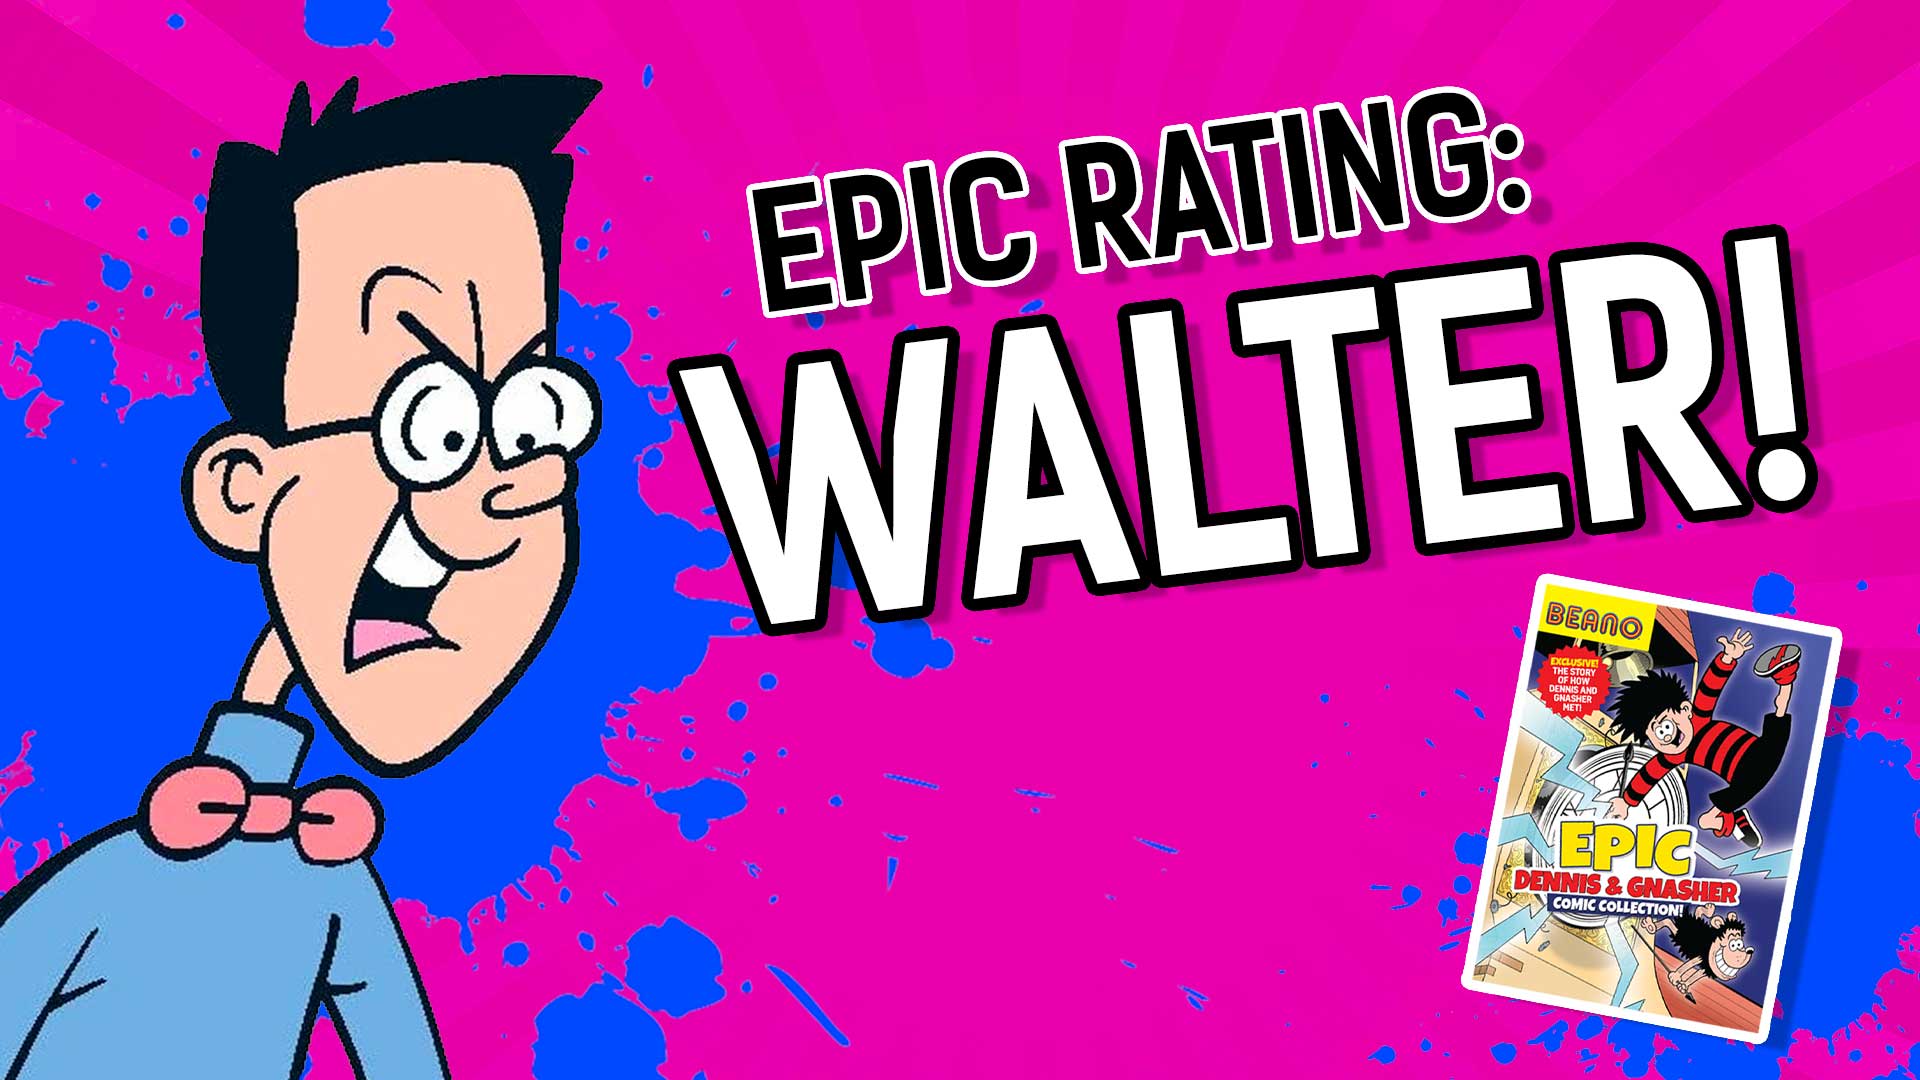 Epic Rating: Walter